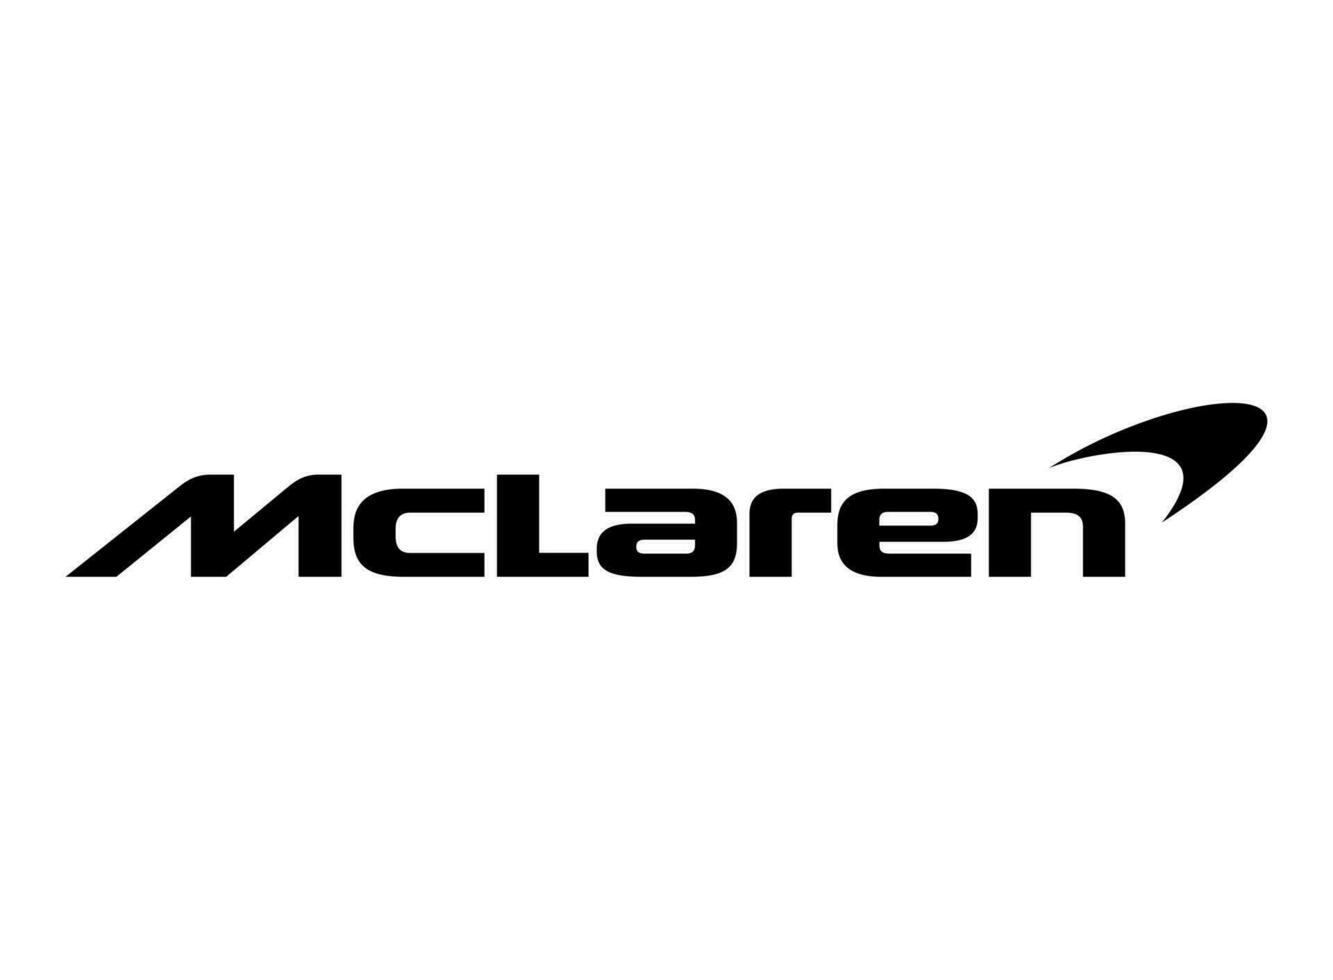 McLaren voiture logo vecteur illustration